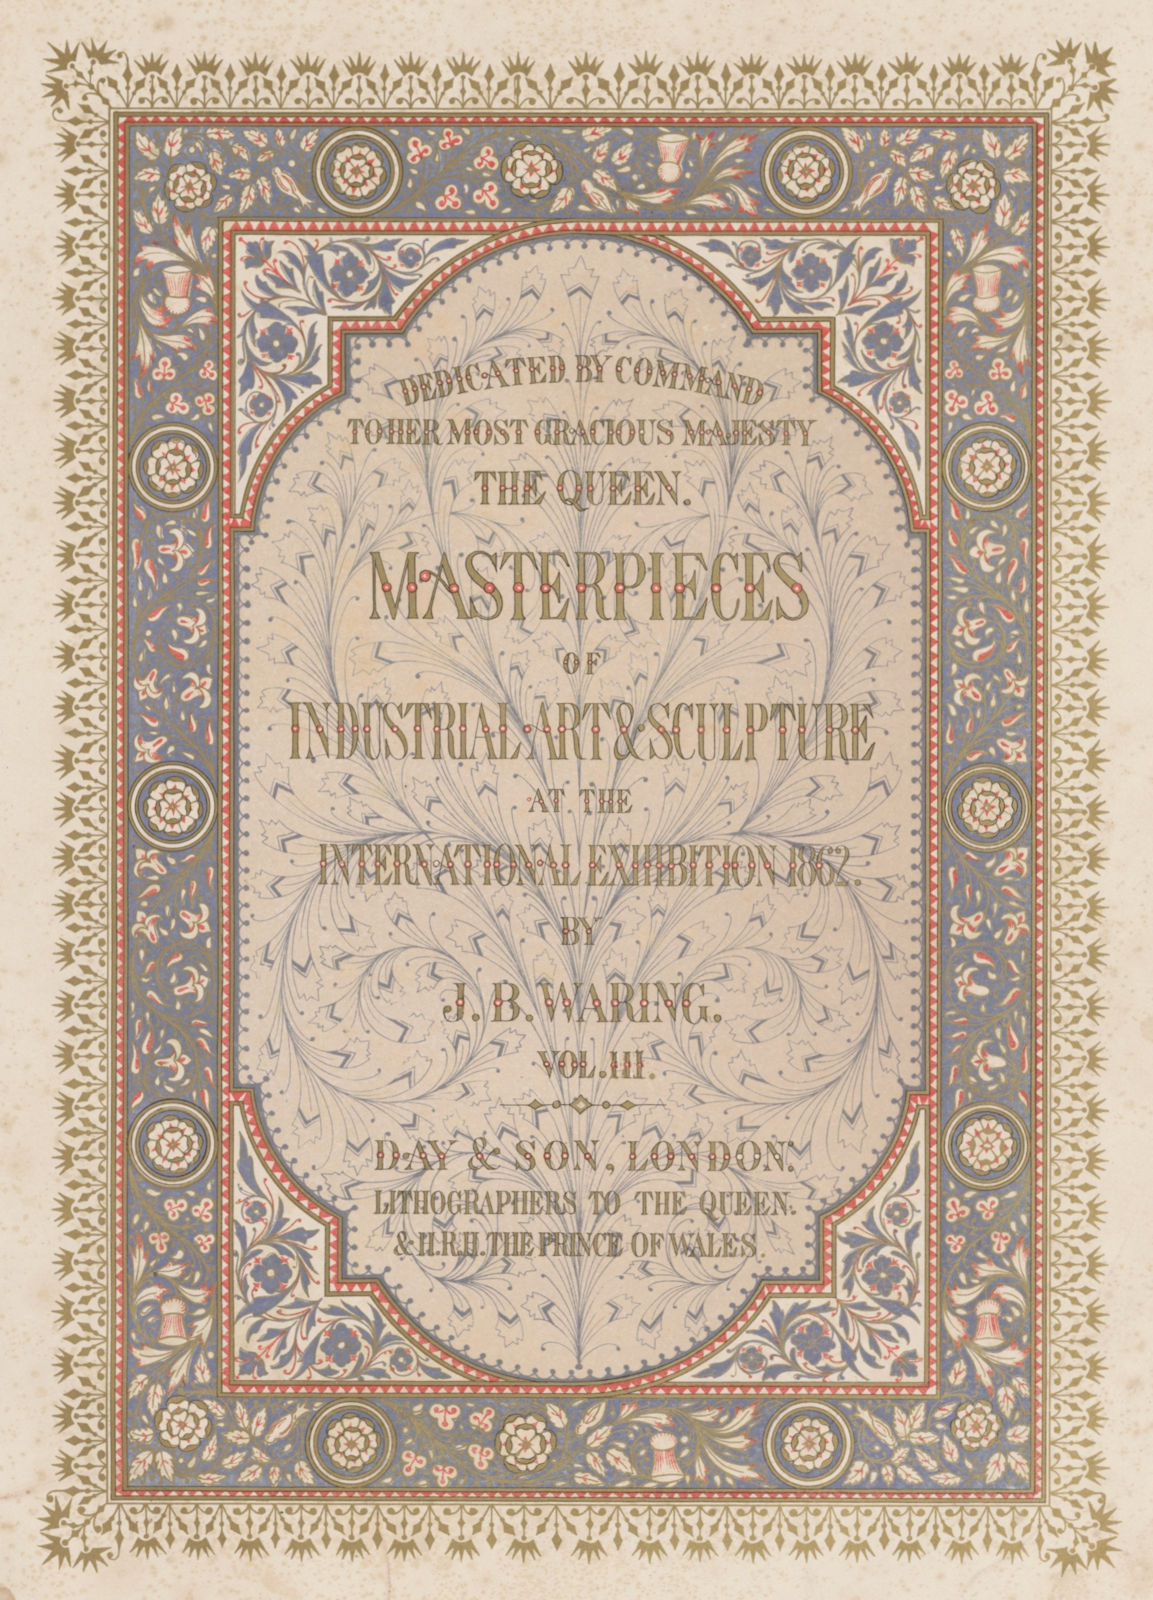 Masterpieces of Industrial Art International Exhibition Frontispiece Waring 1862